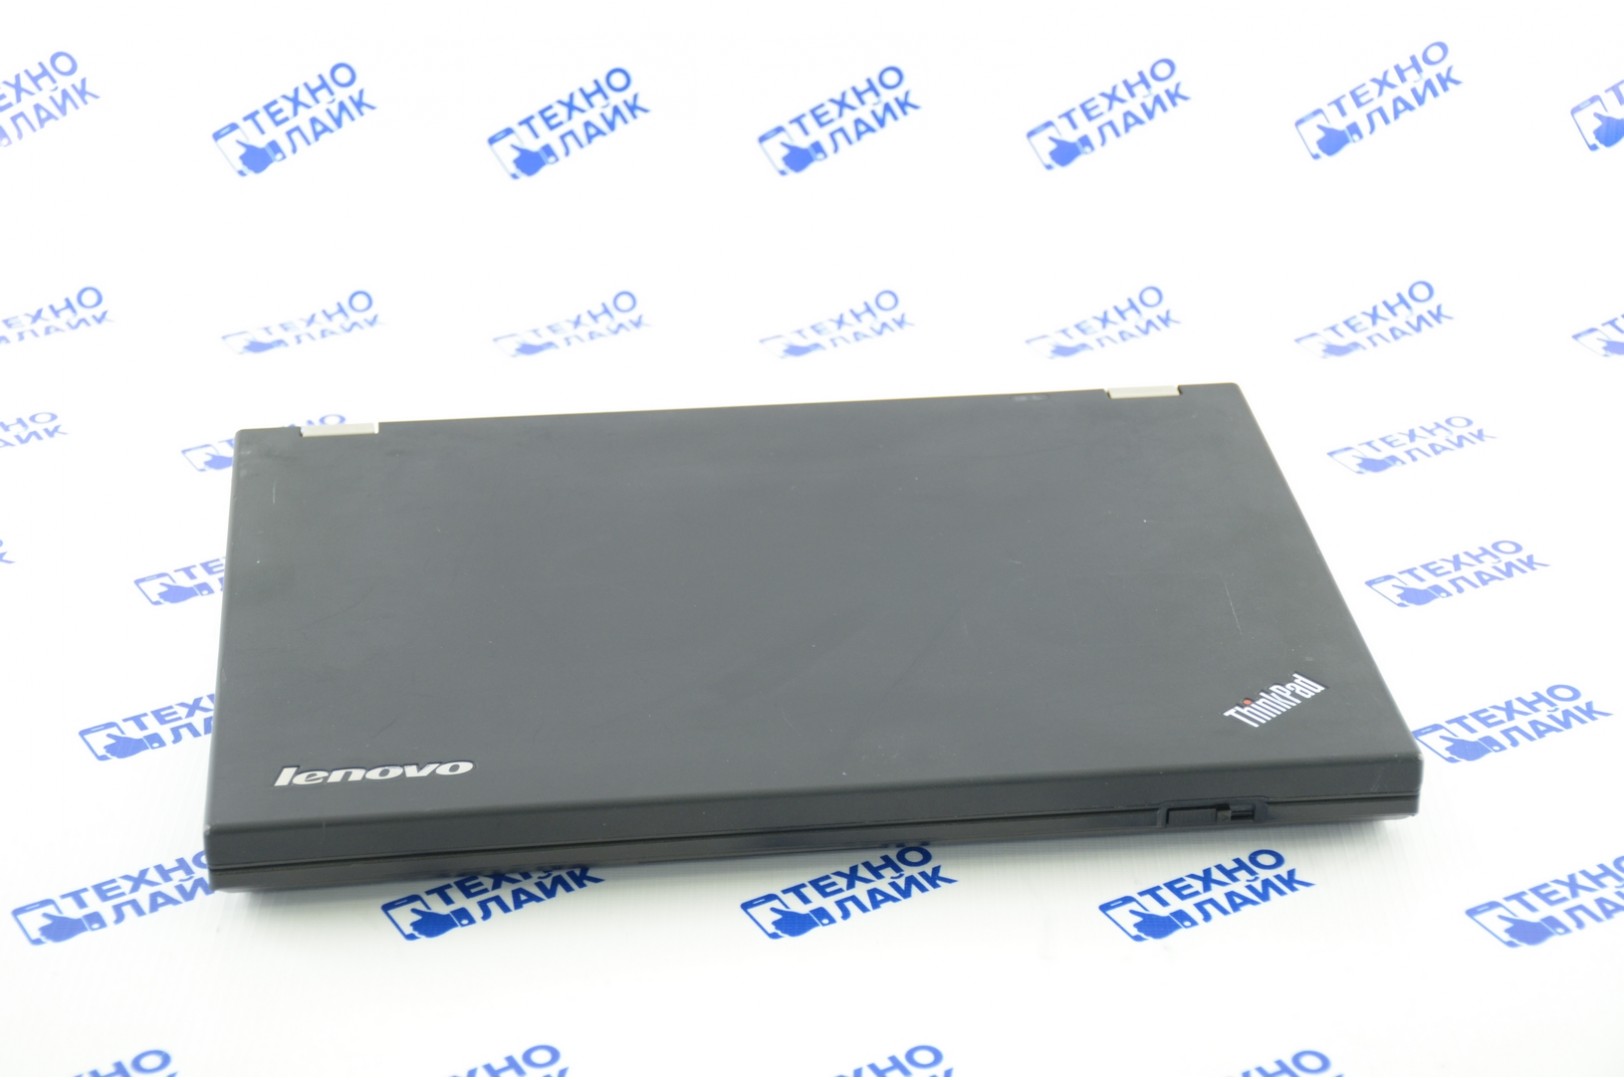 Lenovo thinkpad t430 benchmark hd 4000 vk chat